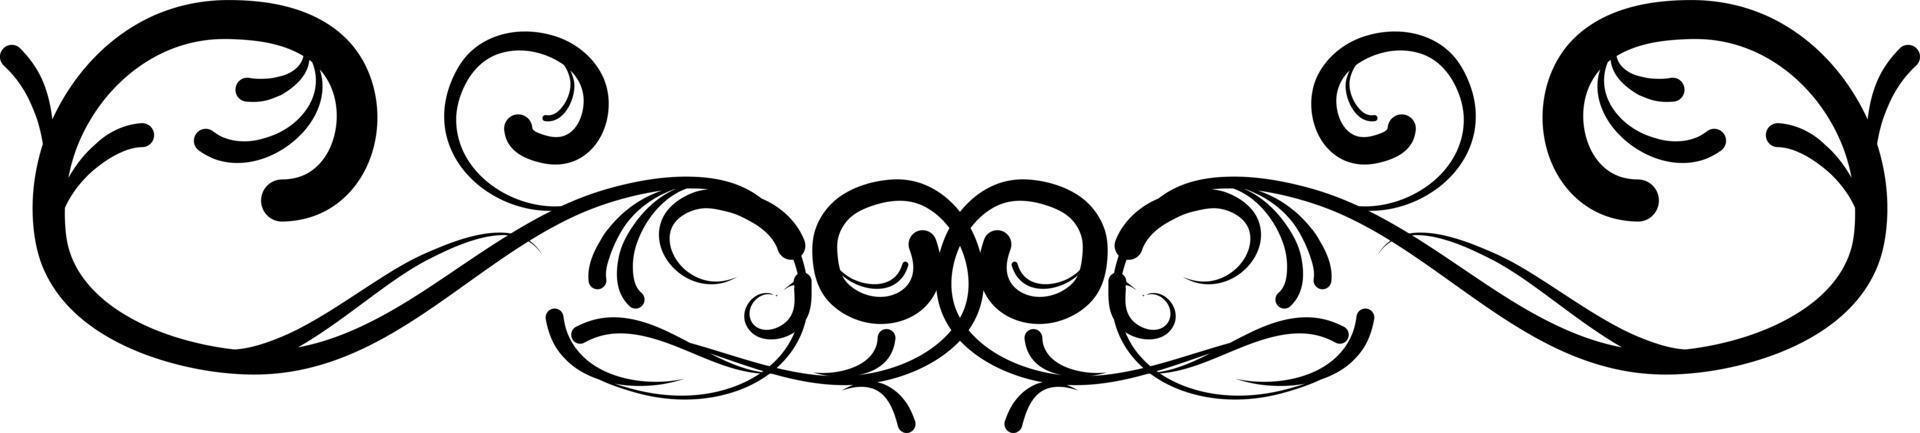 Calligraphic swirl border elements vector